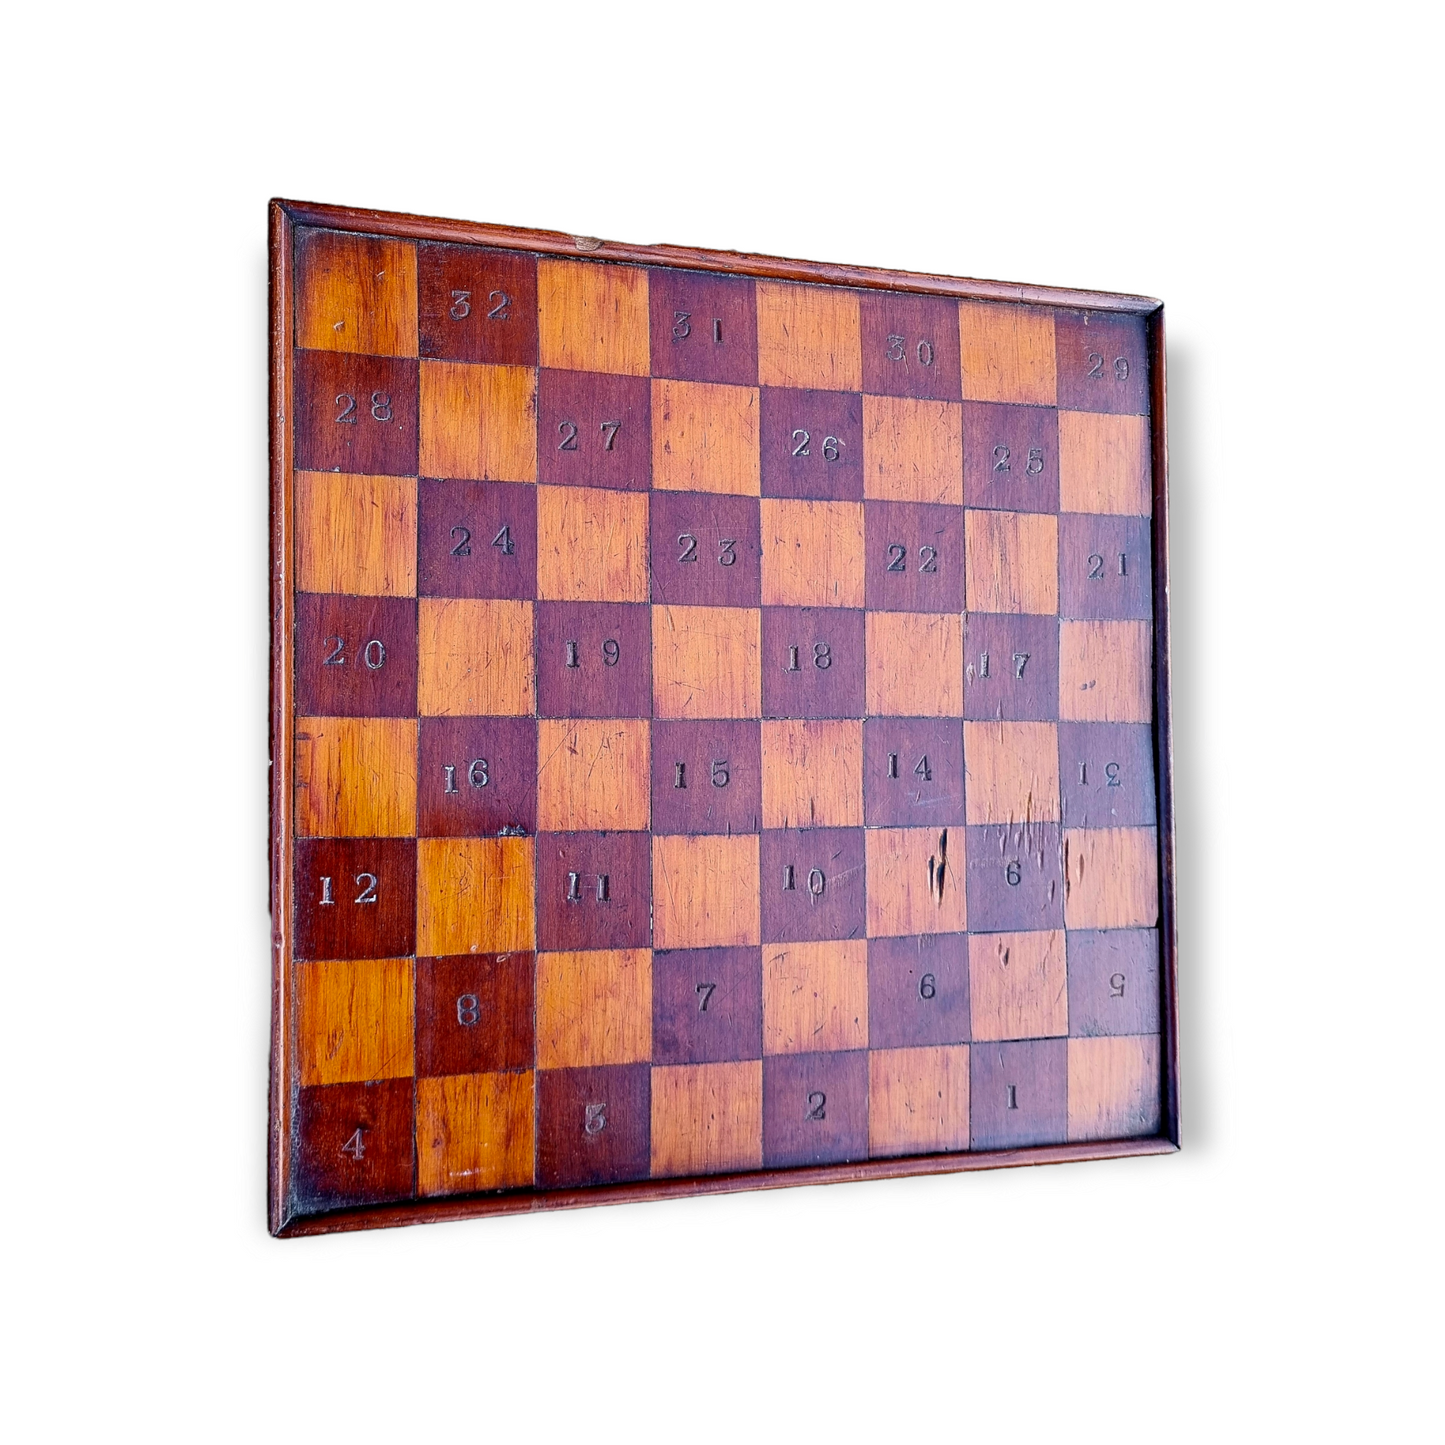 George III Period English Antique Treen Chess Board / Checkers Board / Draughts Board, Circa 1800